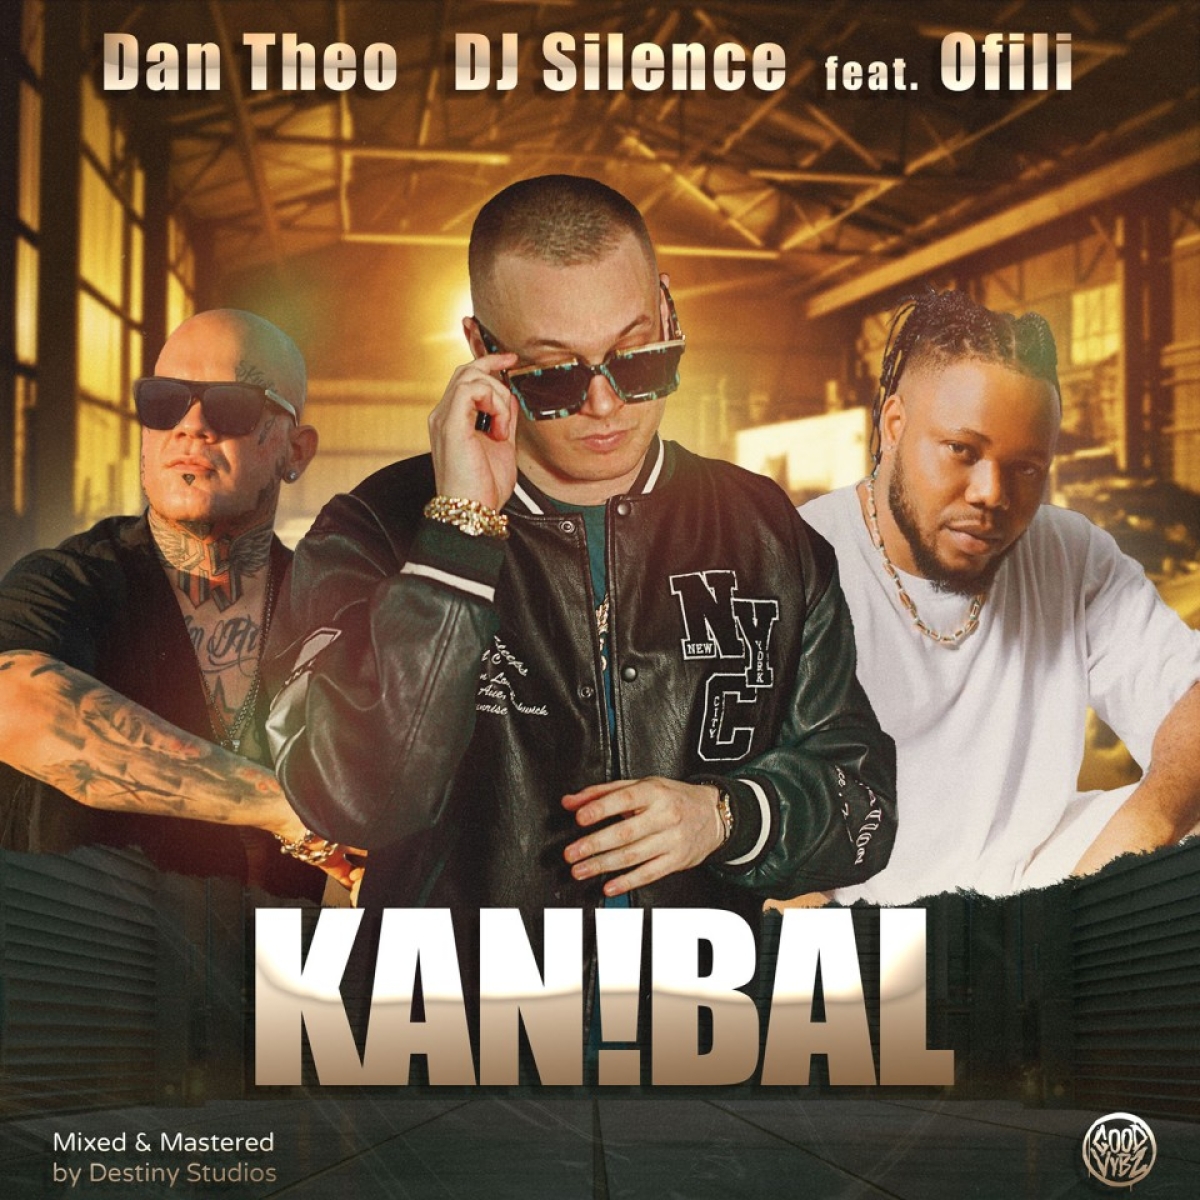 Dan Theo x Dj Silence - KAN!BAL. Συμμετέχει ο Φράνσις Ofili Αντετοκούνμπο!